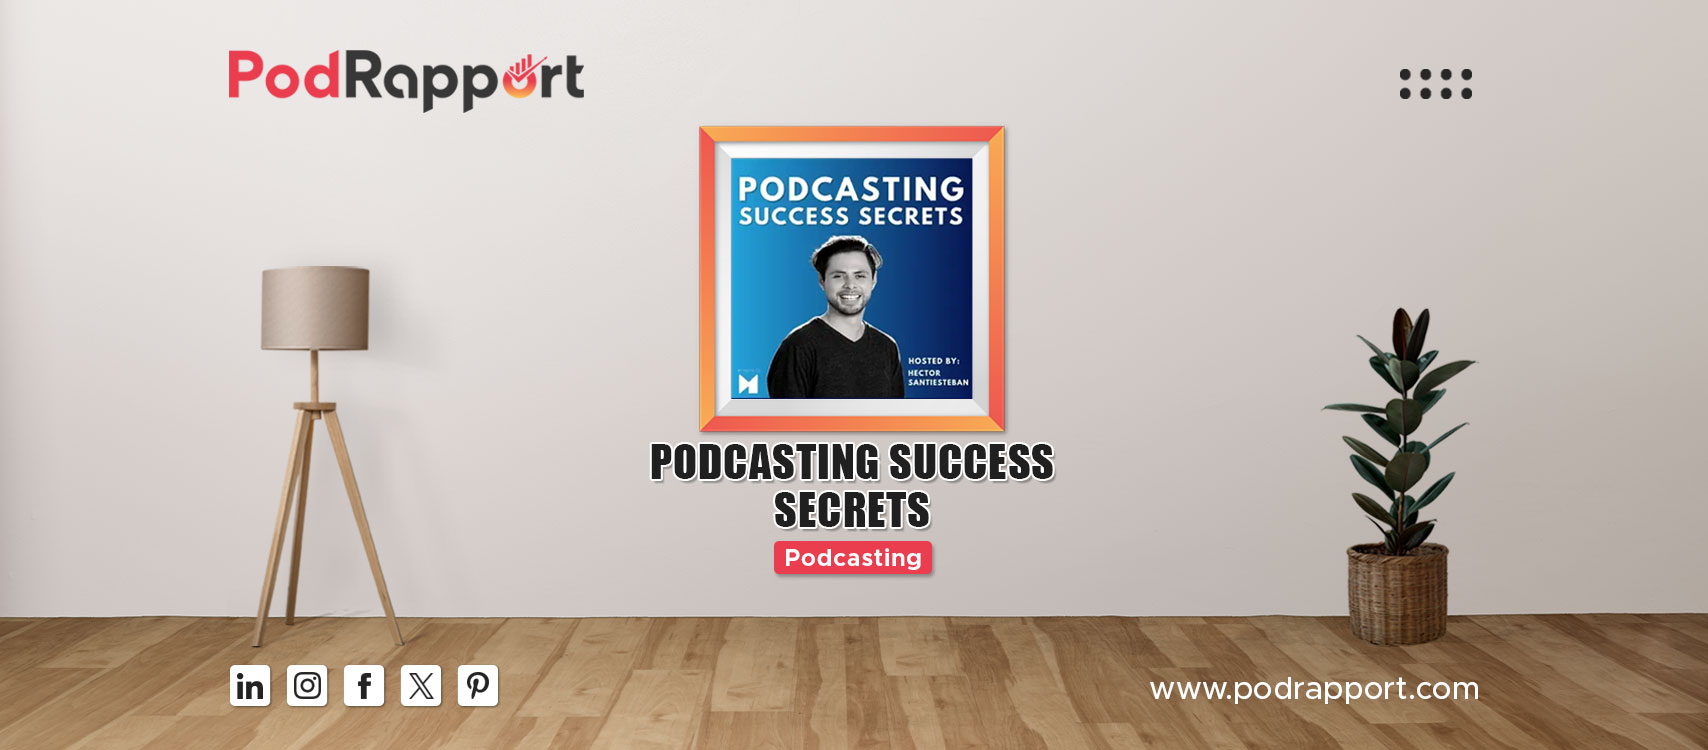 Podcasting Success Secrets